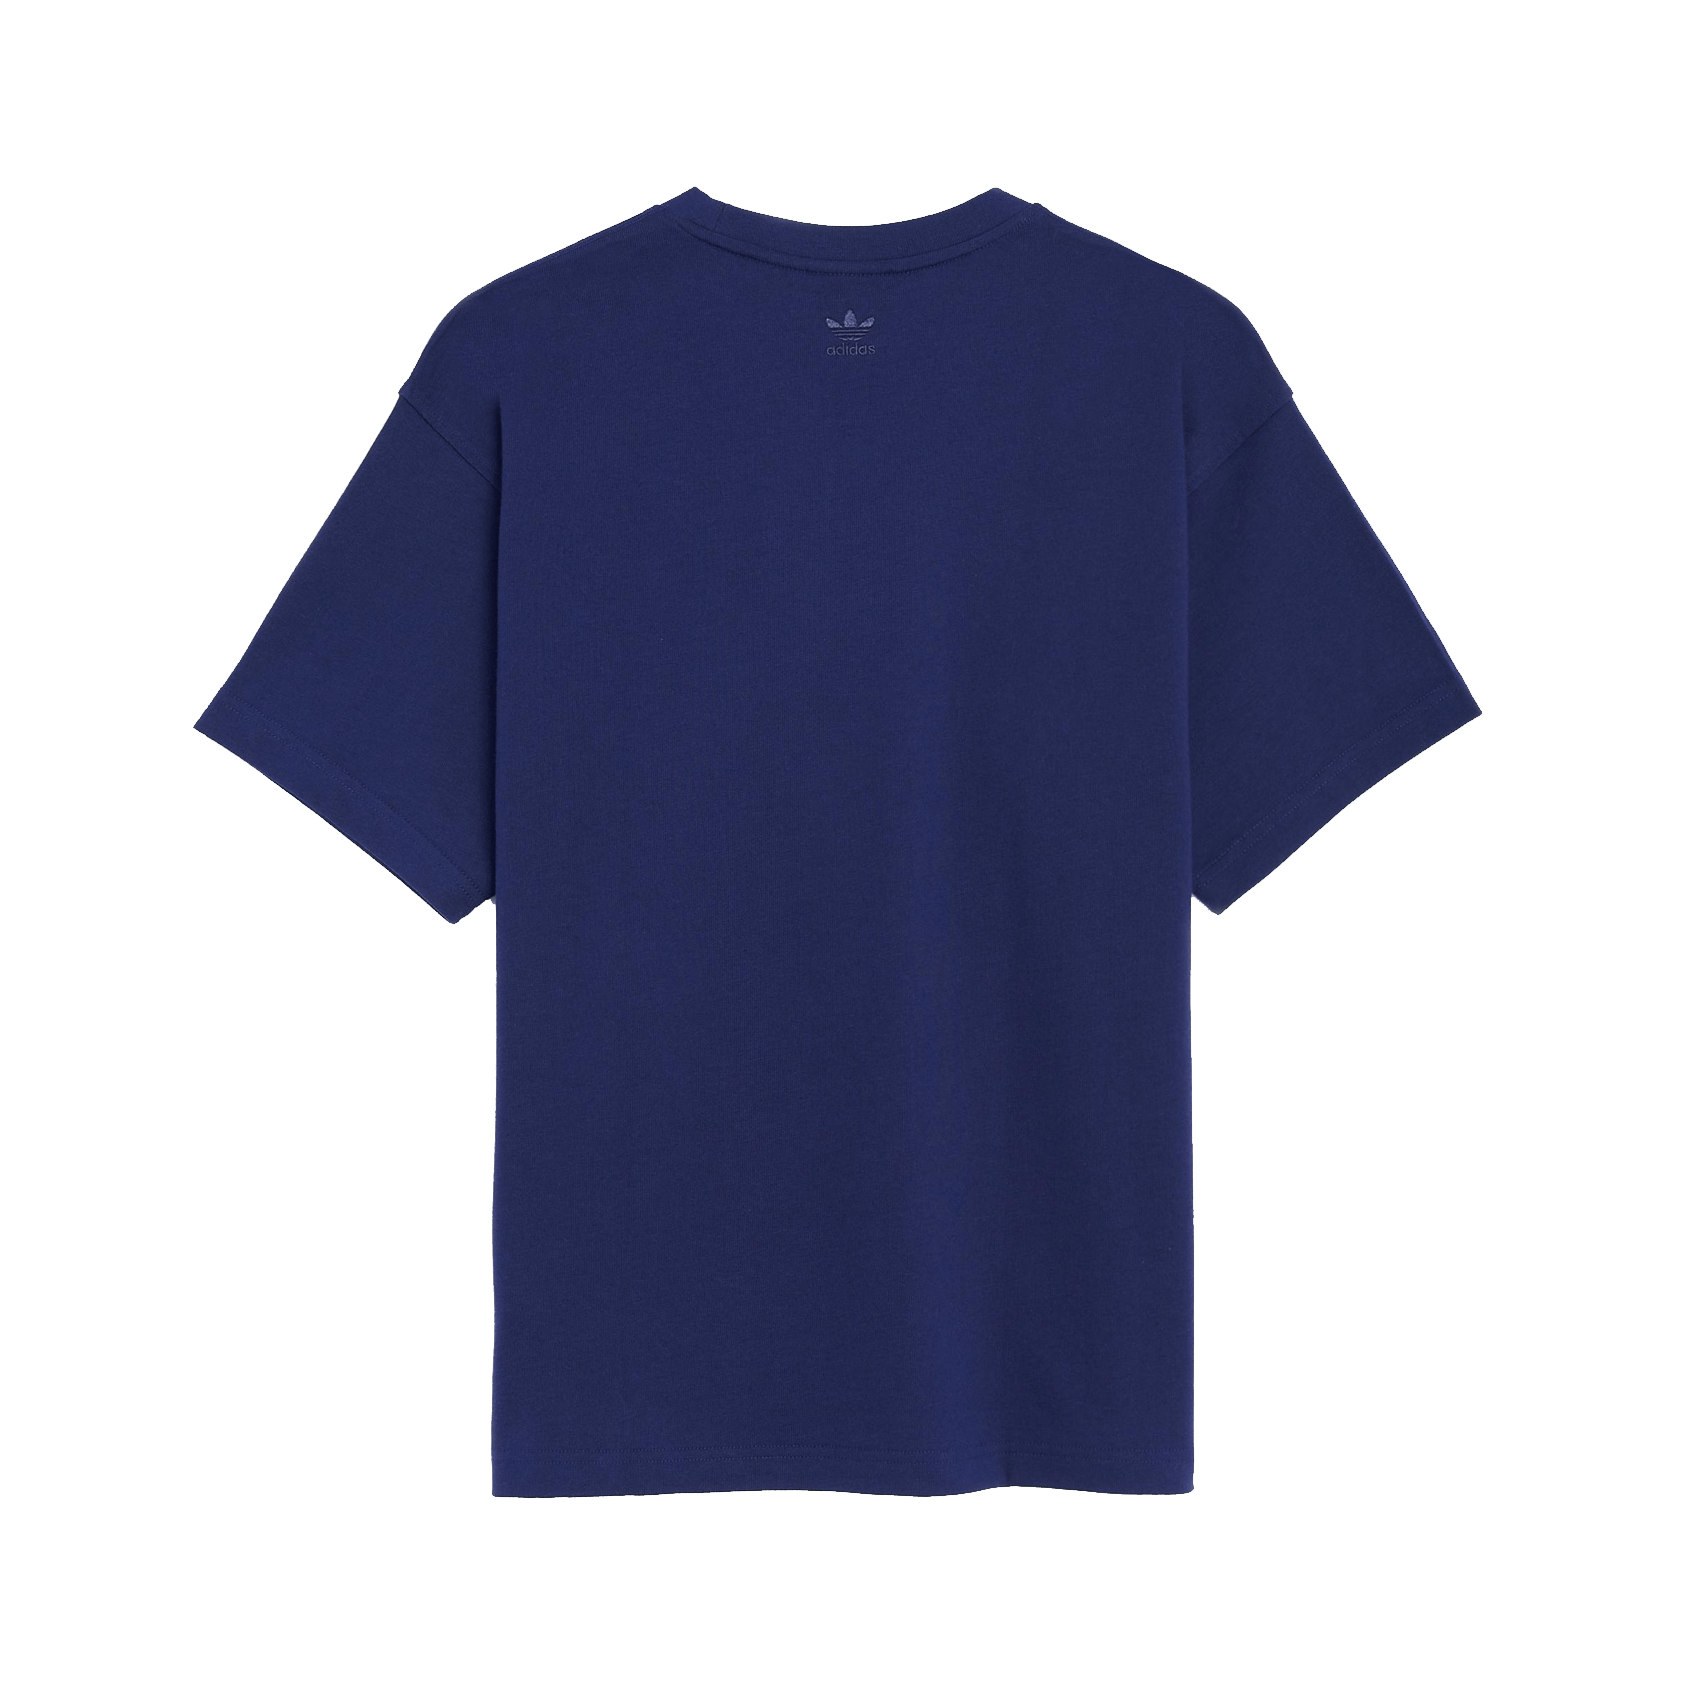 Pw Basics Shirt - Navy.